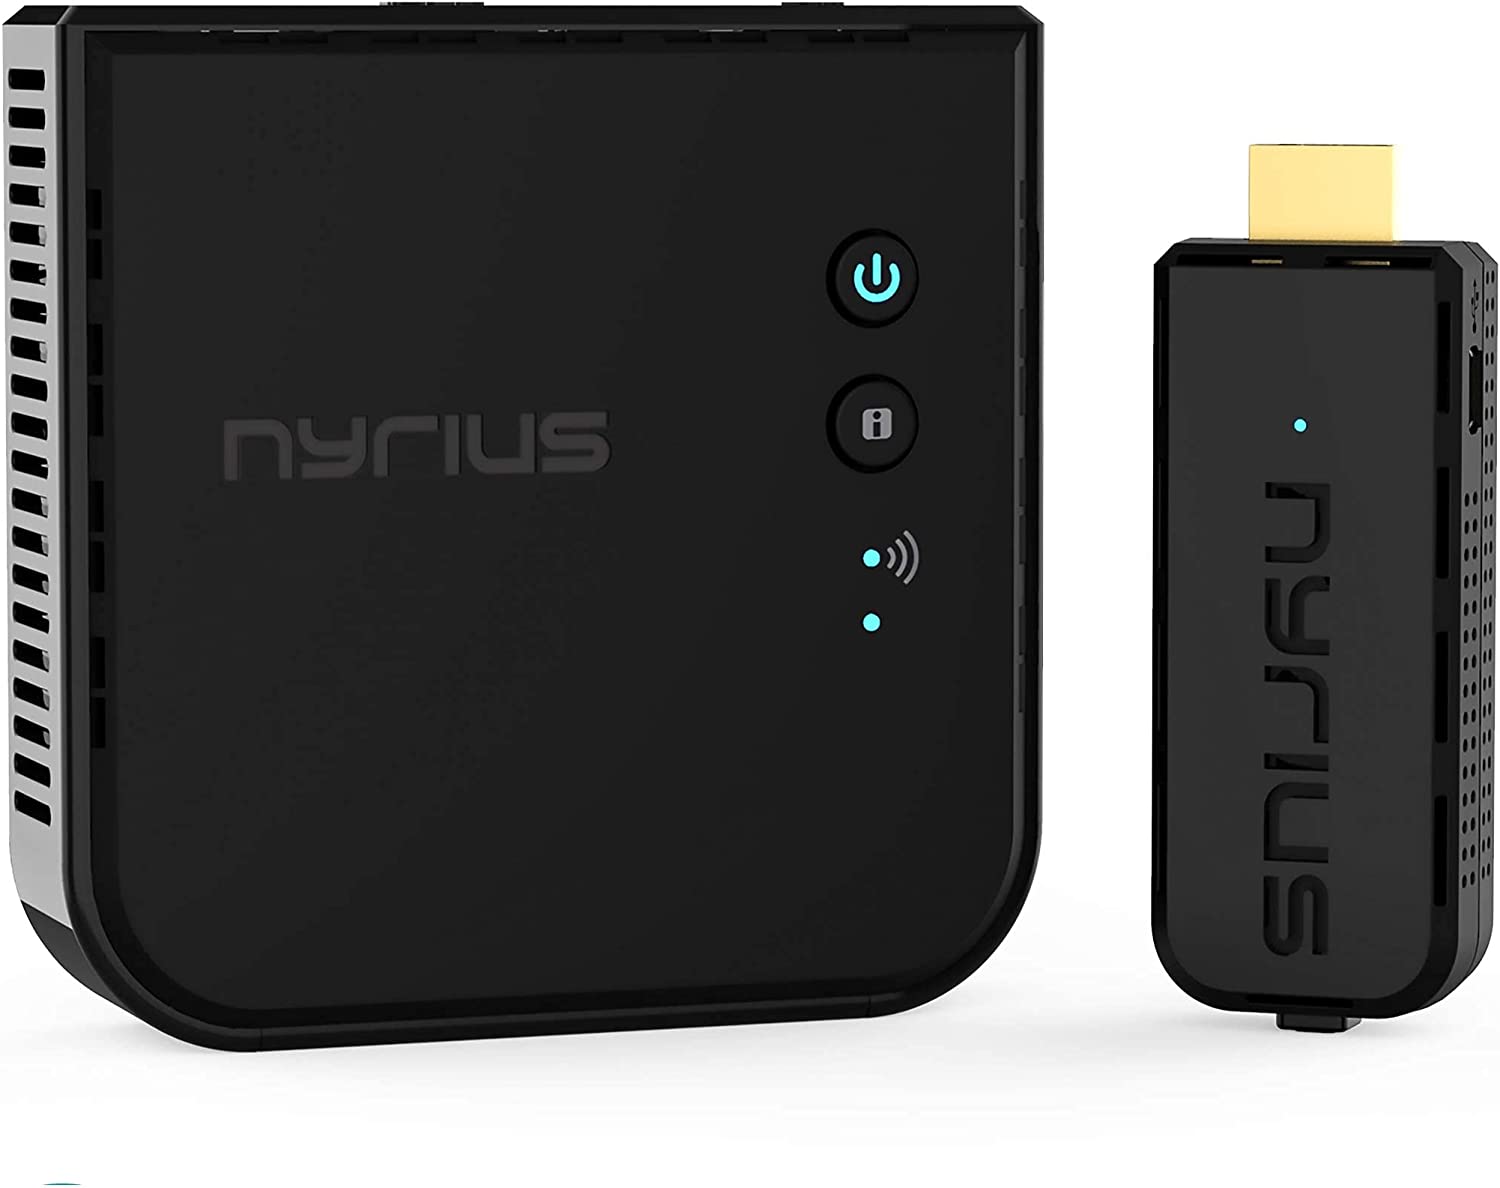  8. Nyrius ARIES Prime Wireless Video HDMI Transmitter 